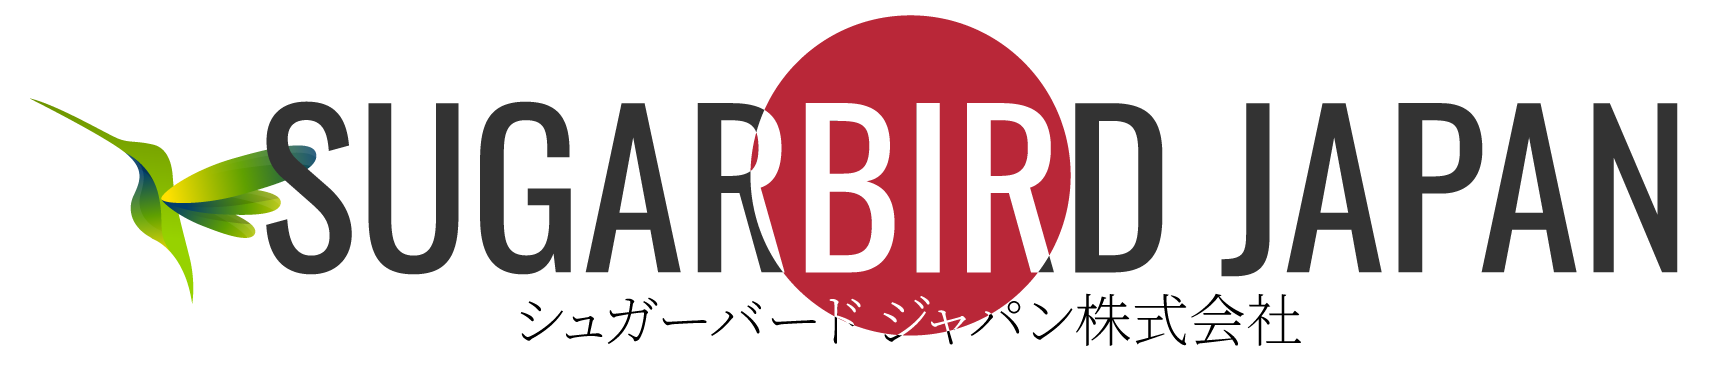 SUGARBIRD JAPAN 株式会社